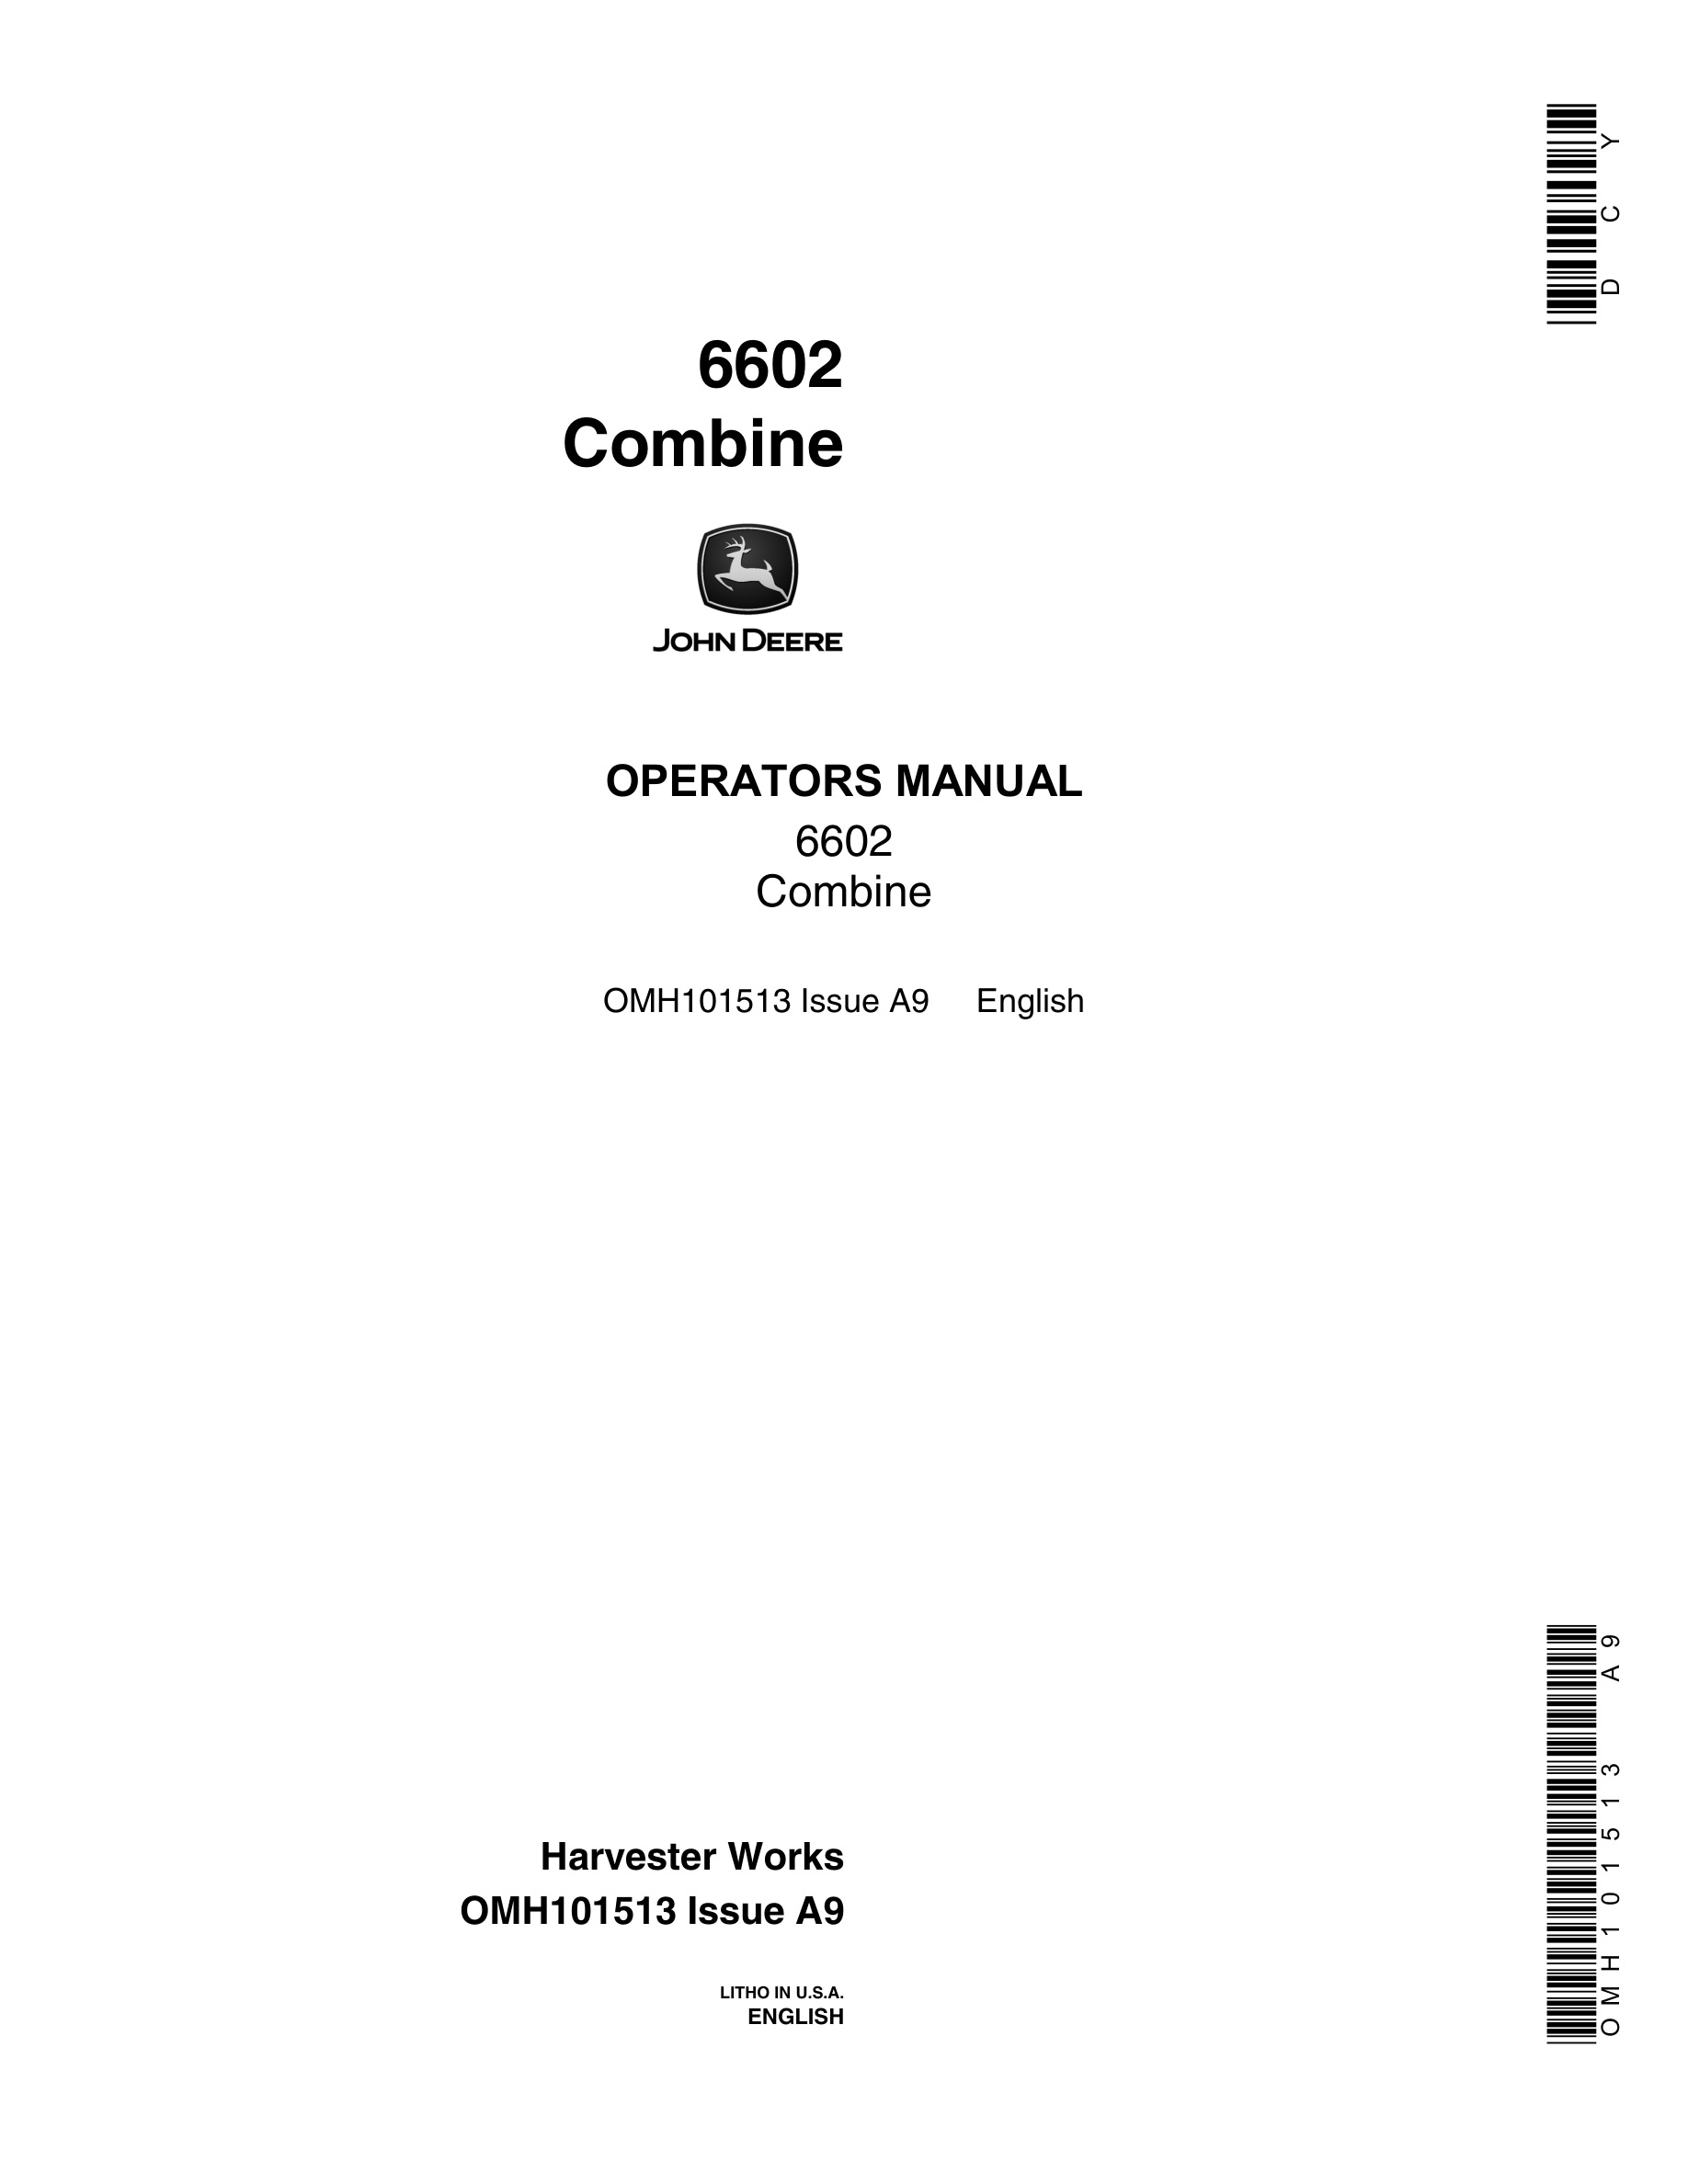 John Deere 6602 Combine Operator Manual OMH101513-1